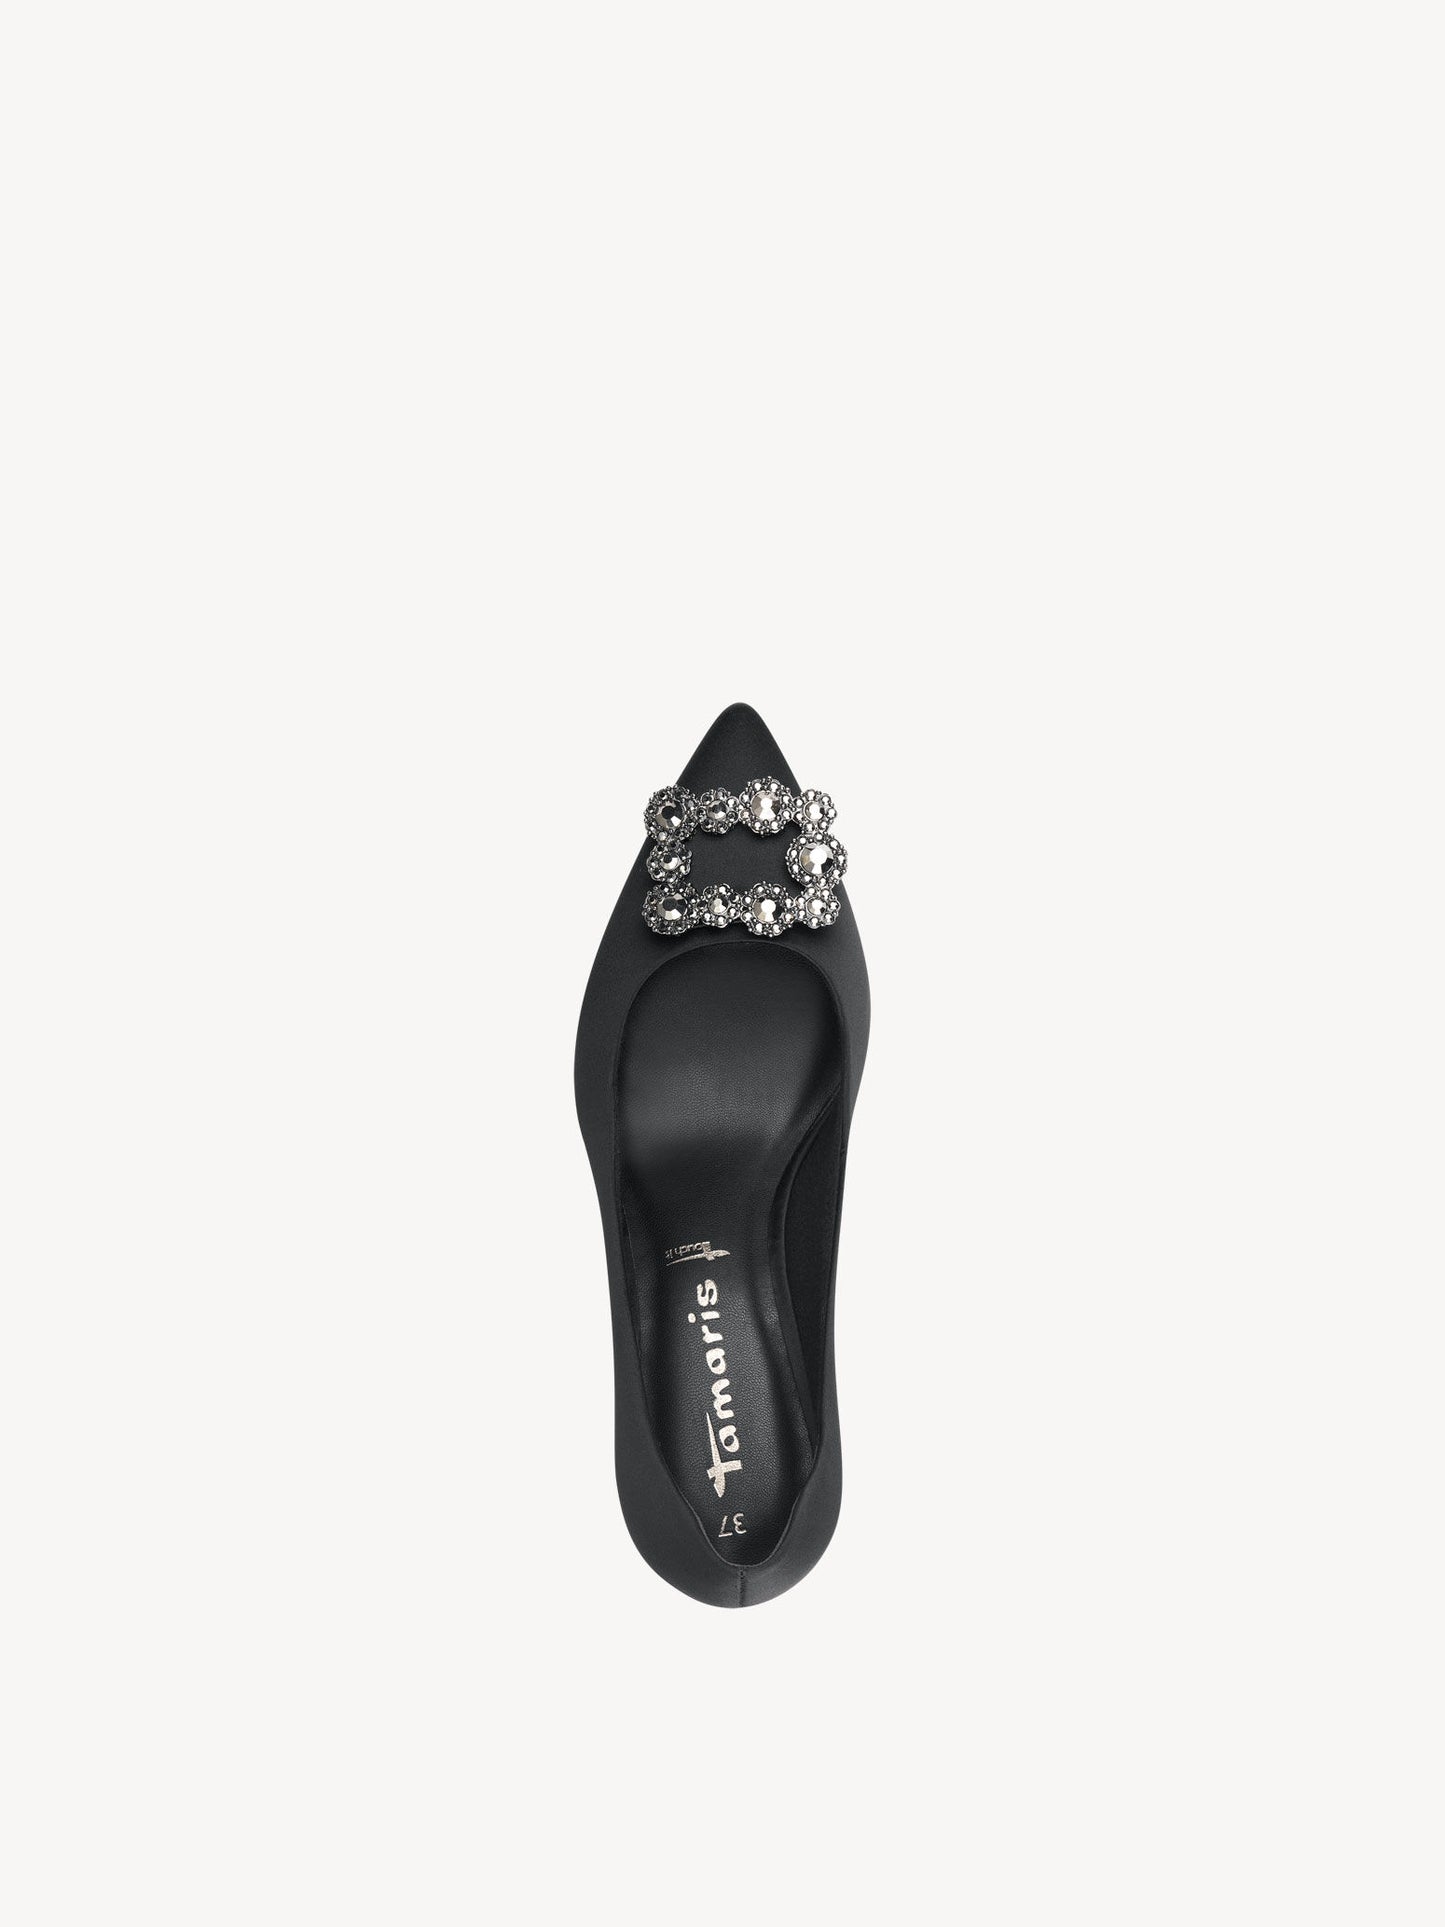 Tamaris Women's 1-22430-20 070 Heel Pumps Shoes Black Satin